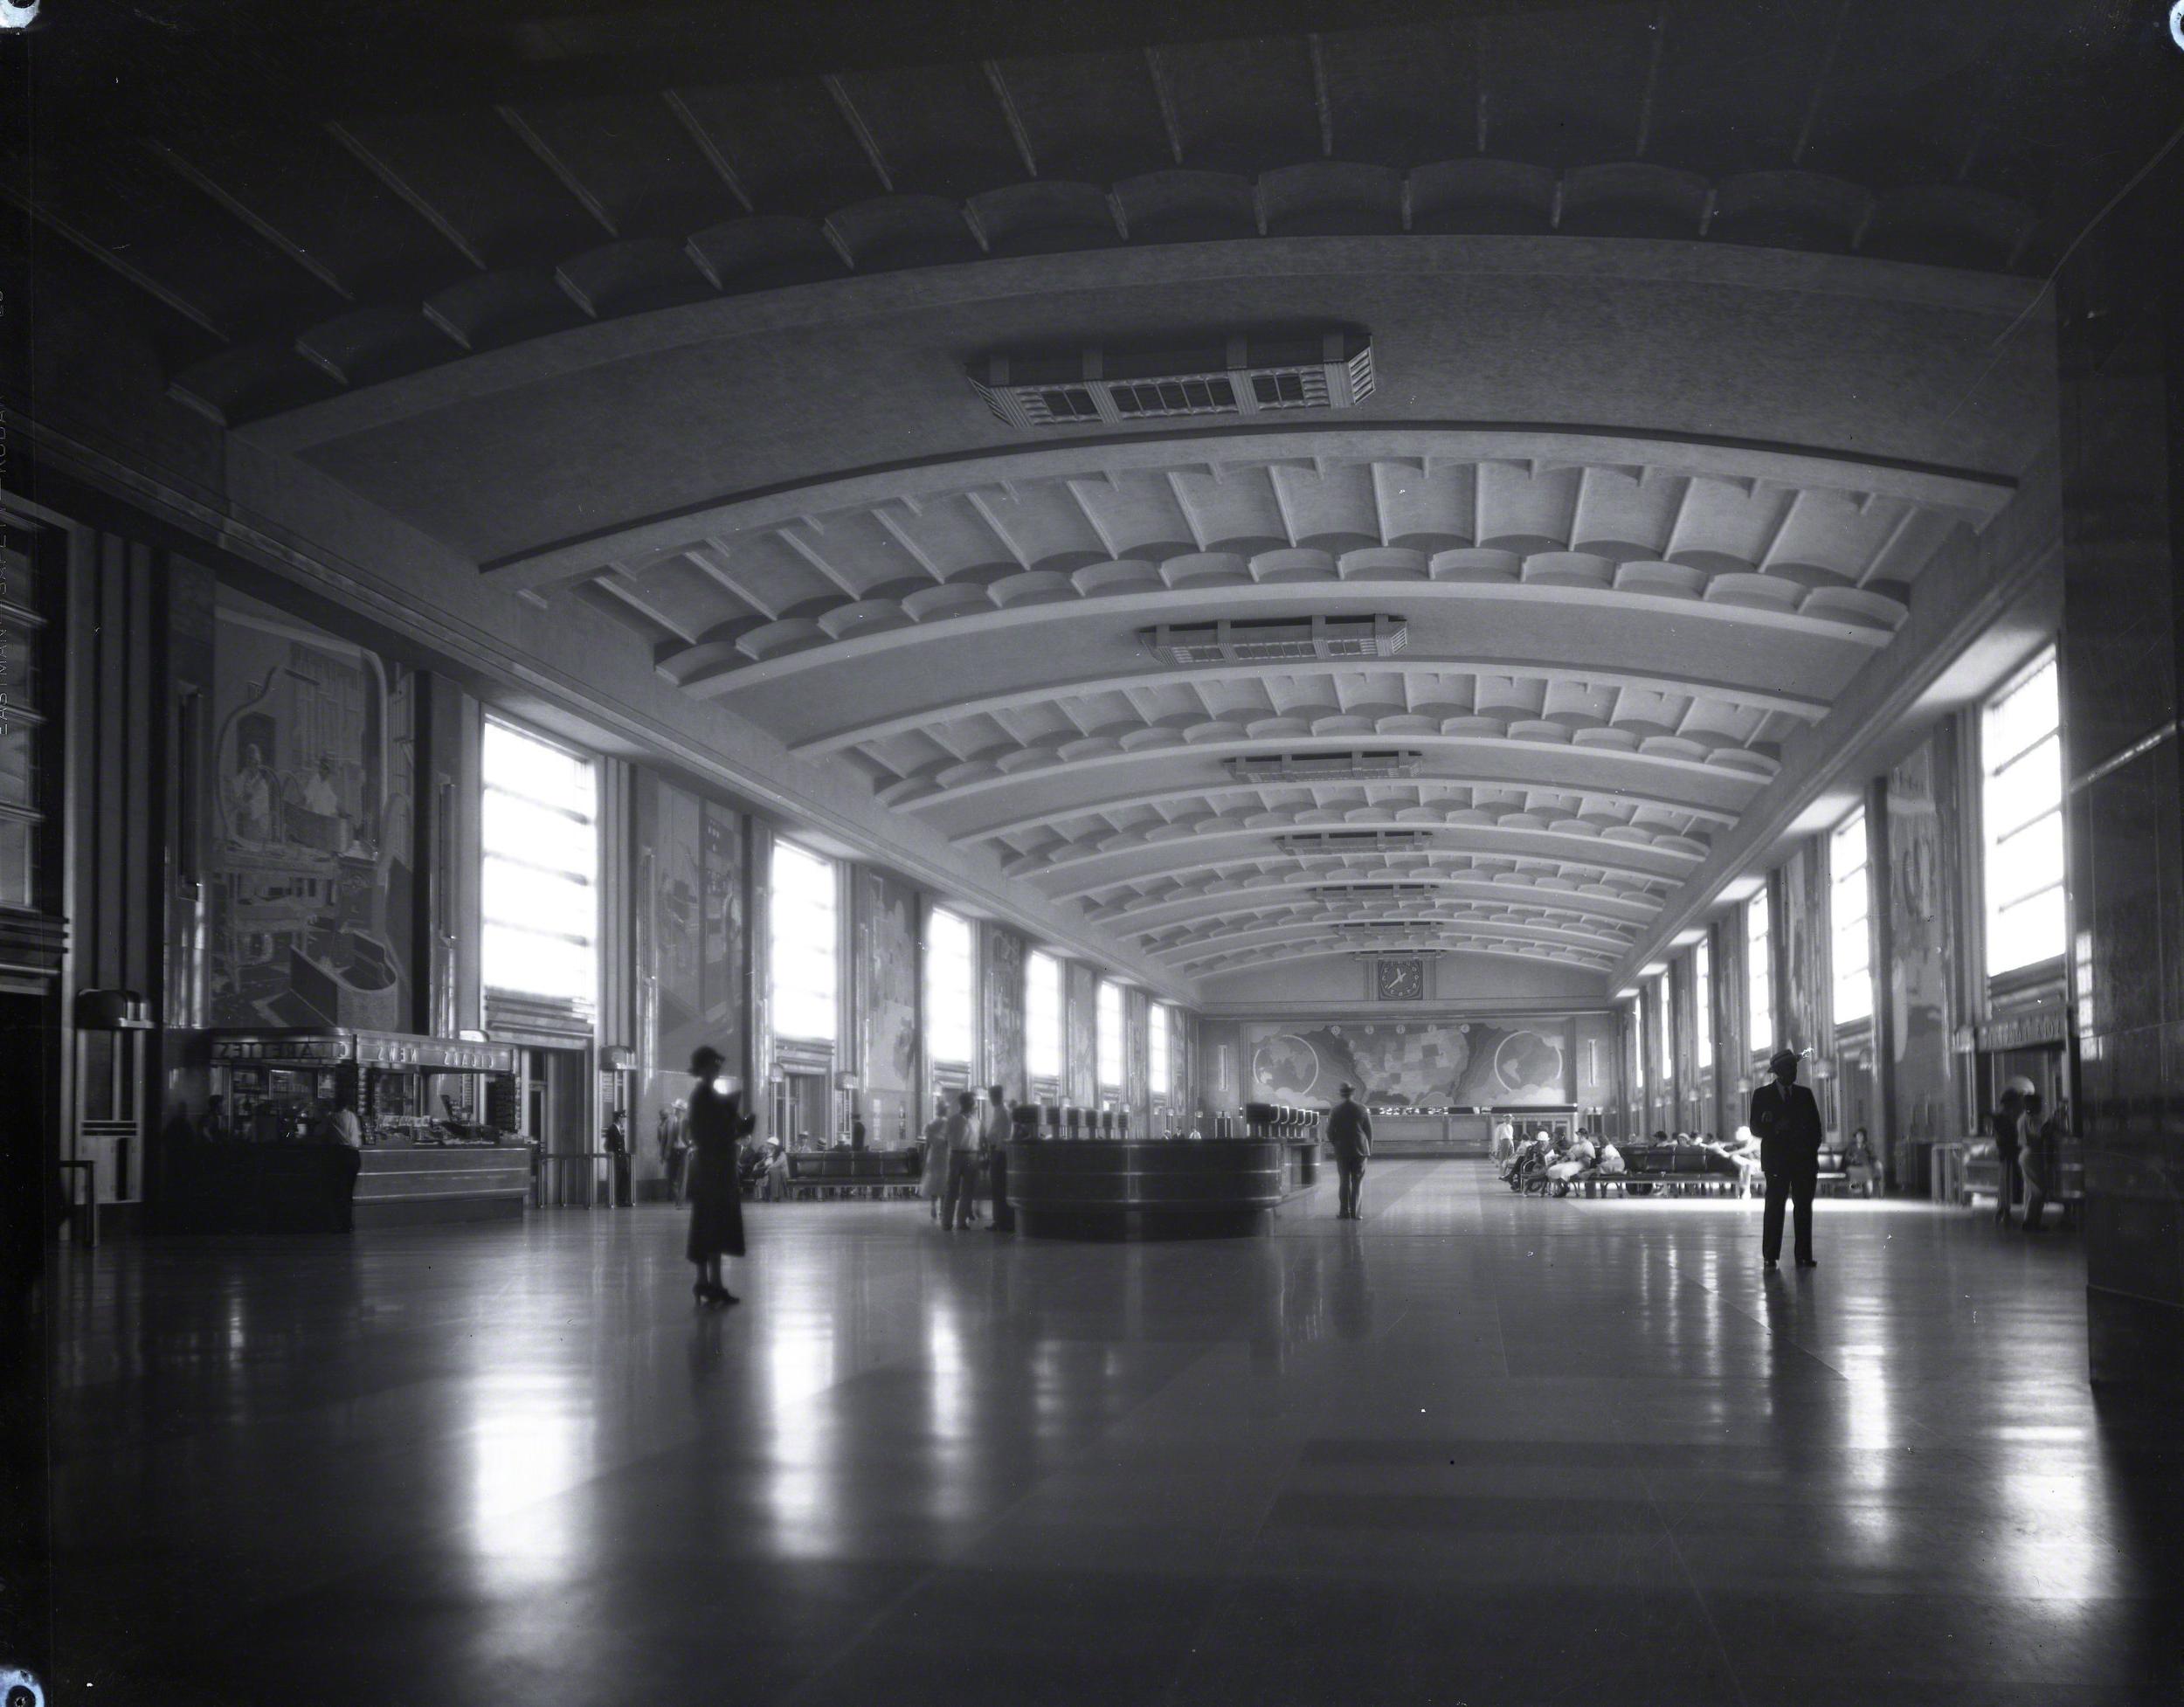 historic image of union terminal's interior